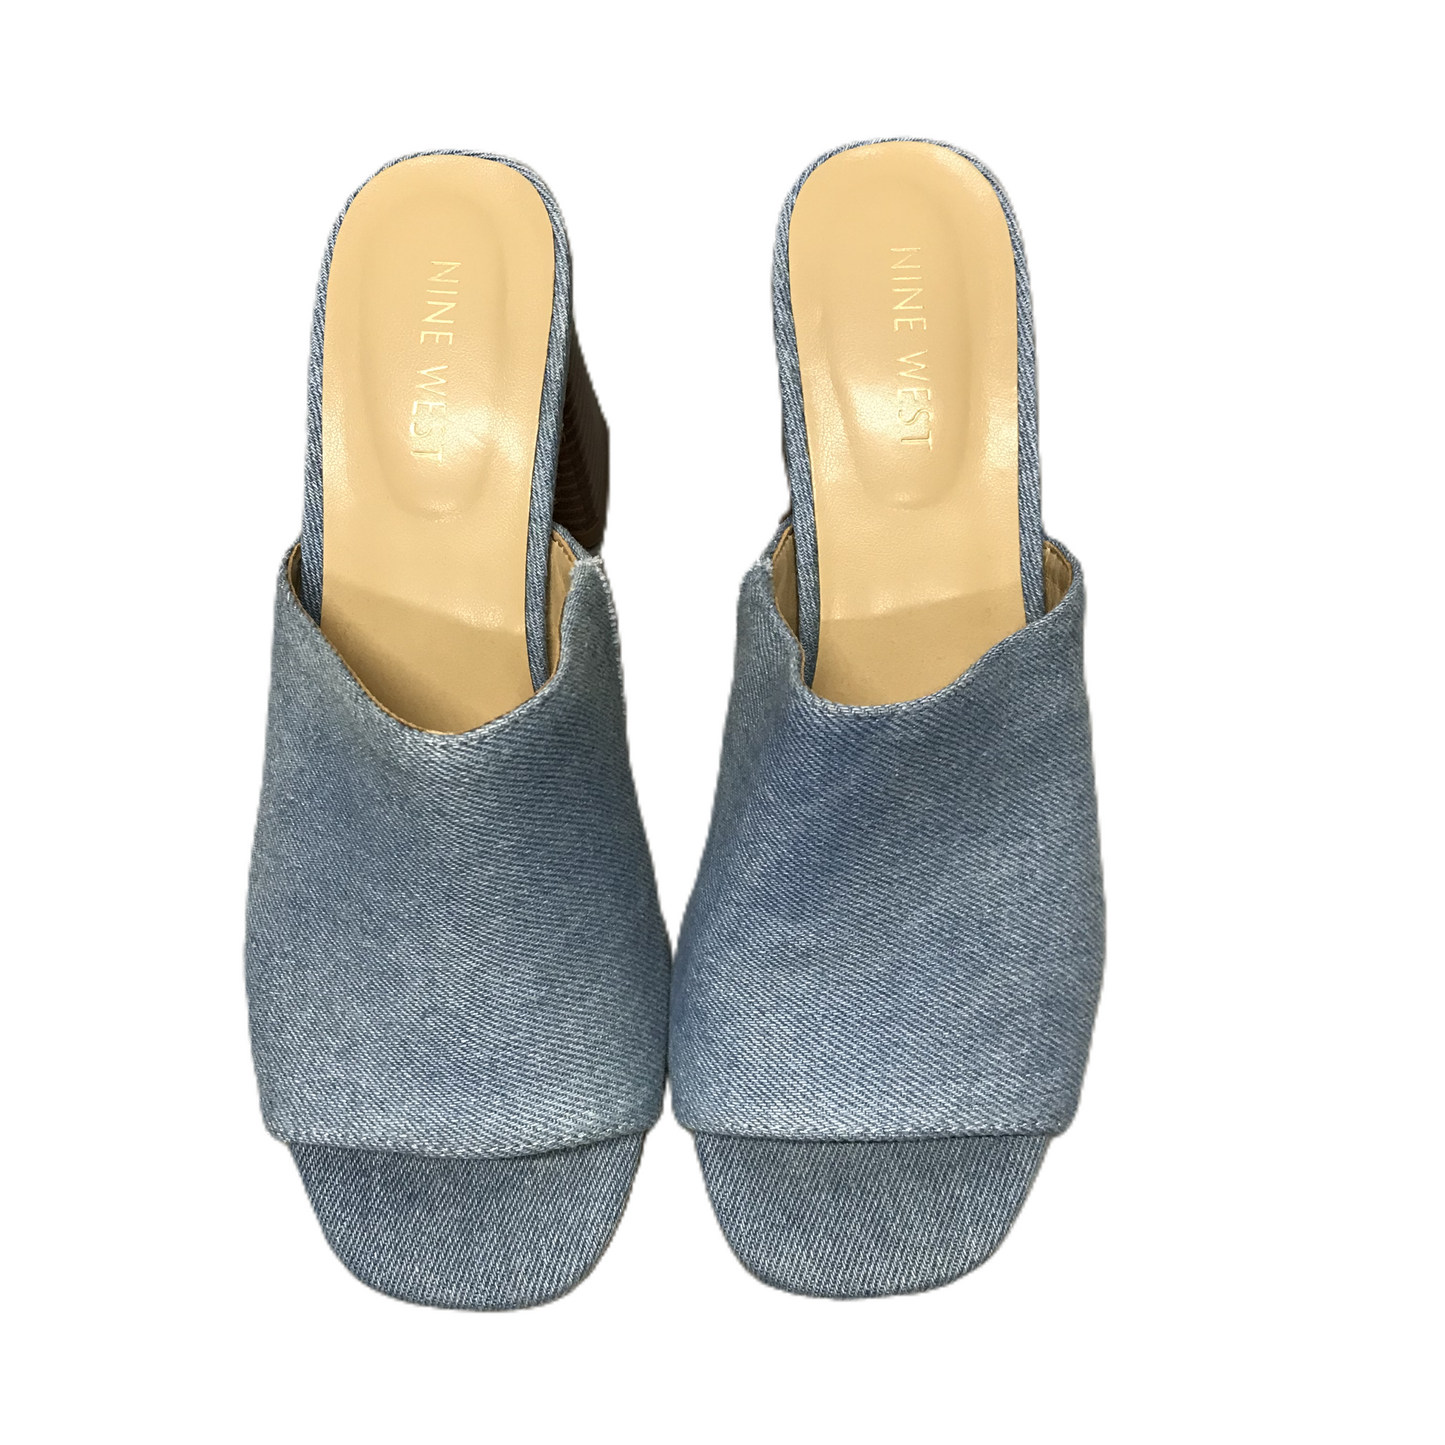 Blue Sandals Heels Block By Nine West, Size: 6.5